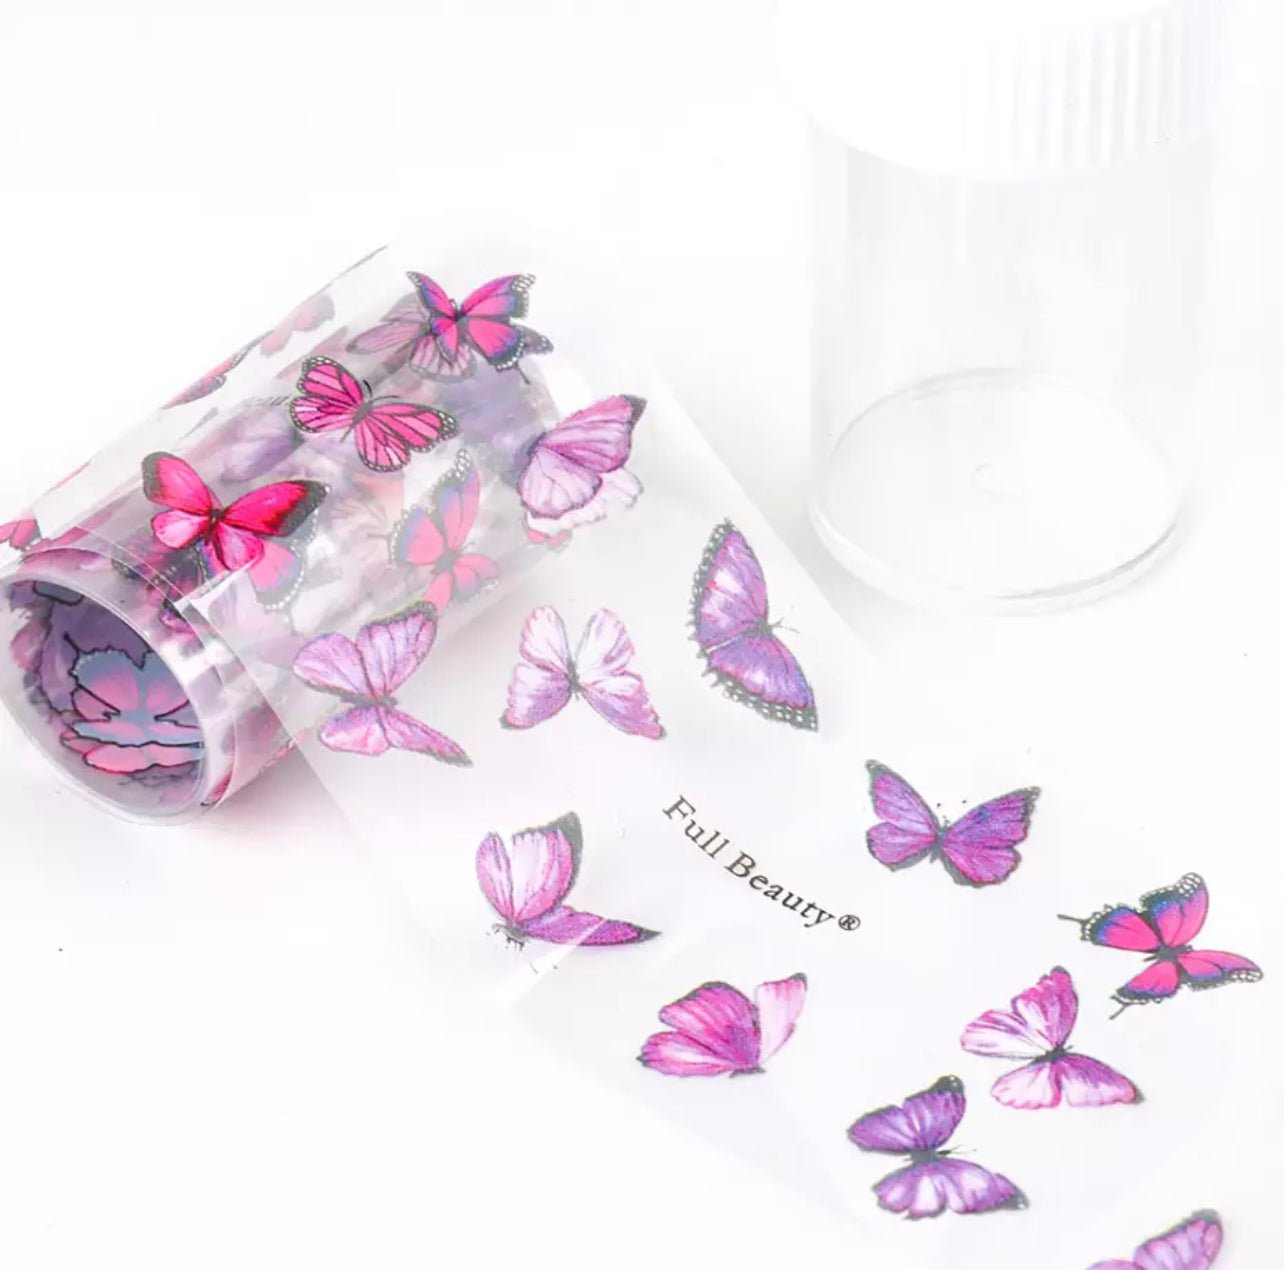 Transferfolie Butterfly Violet Mix 2 - Doriana Cosmetics GmbH